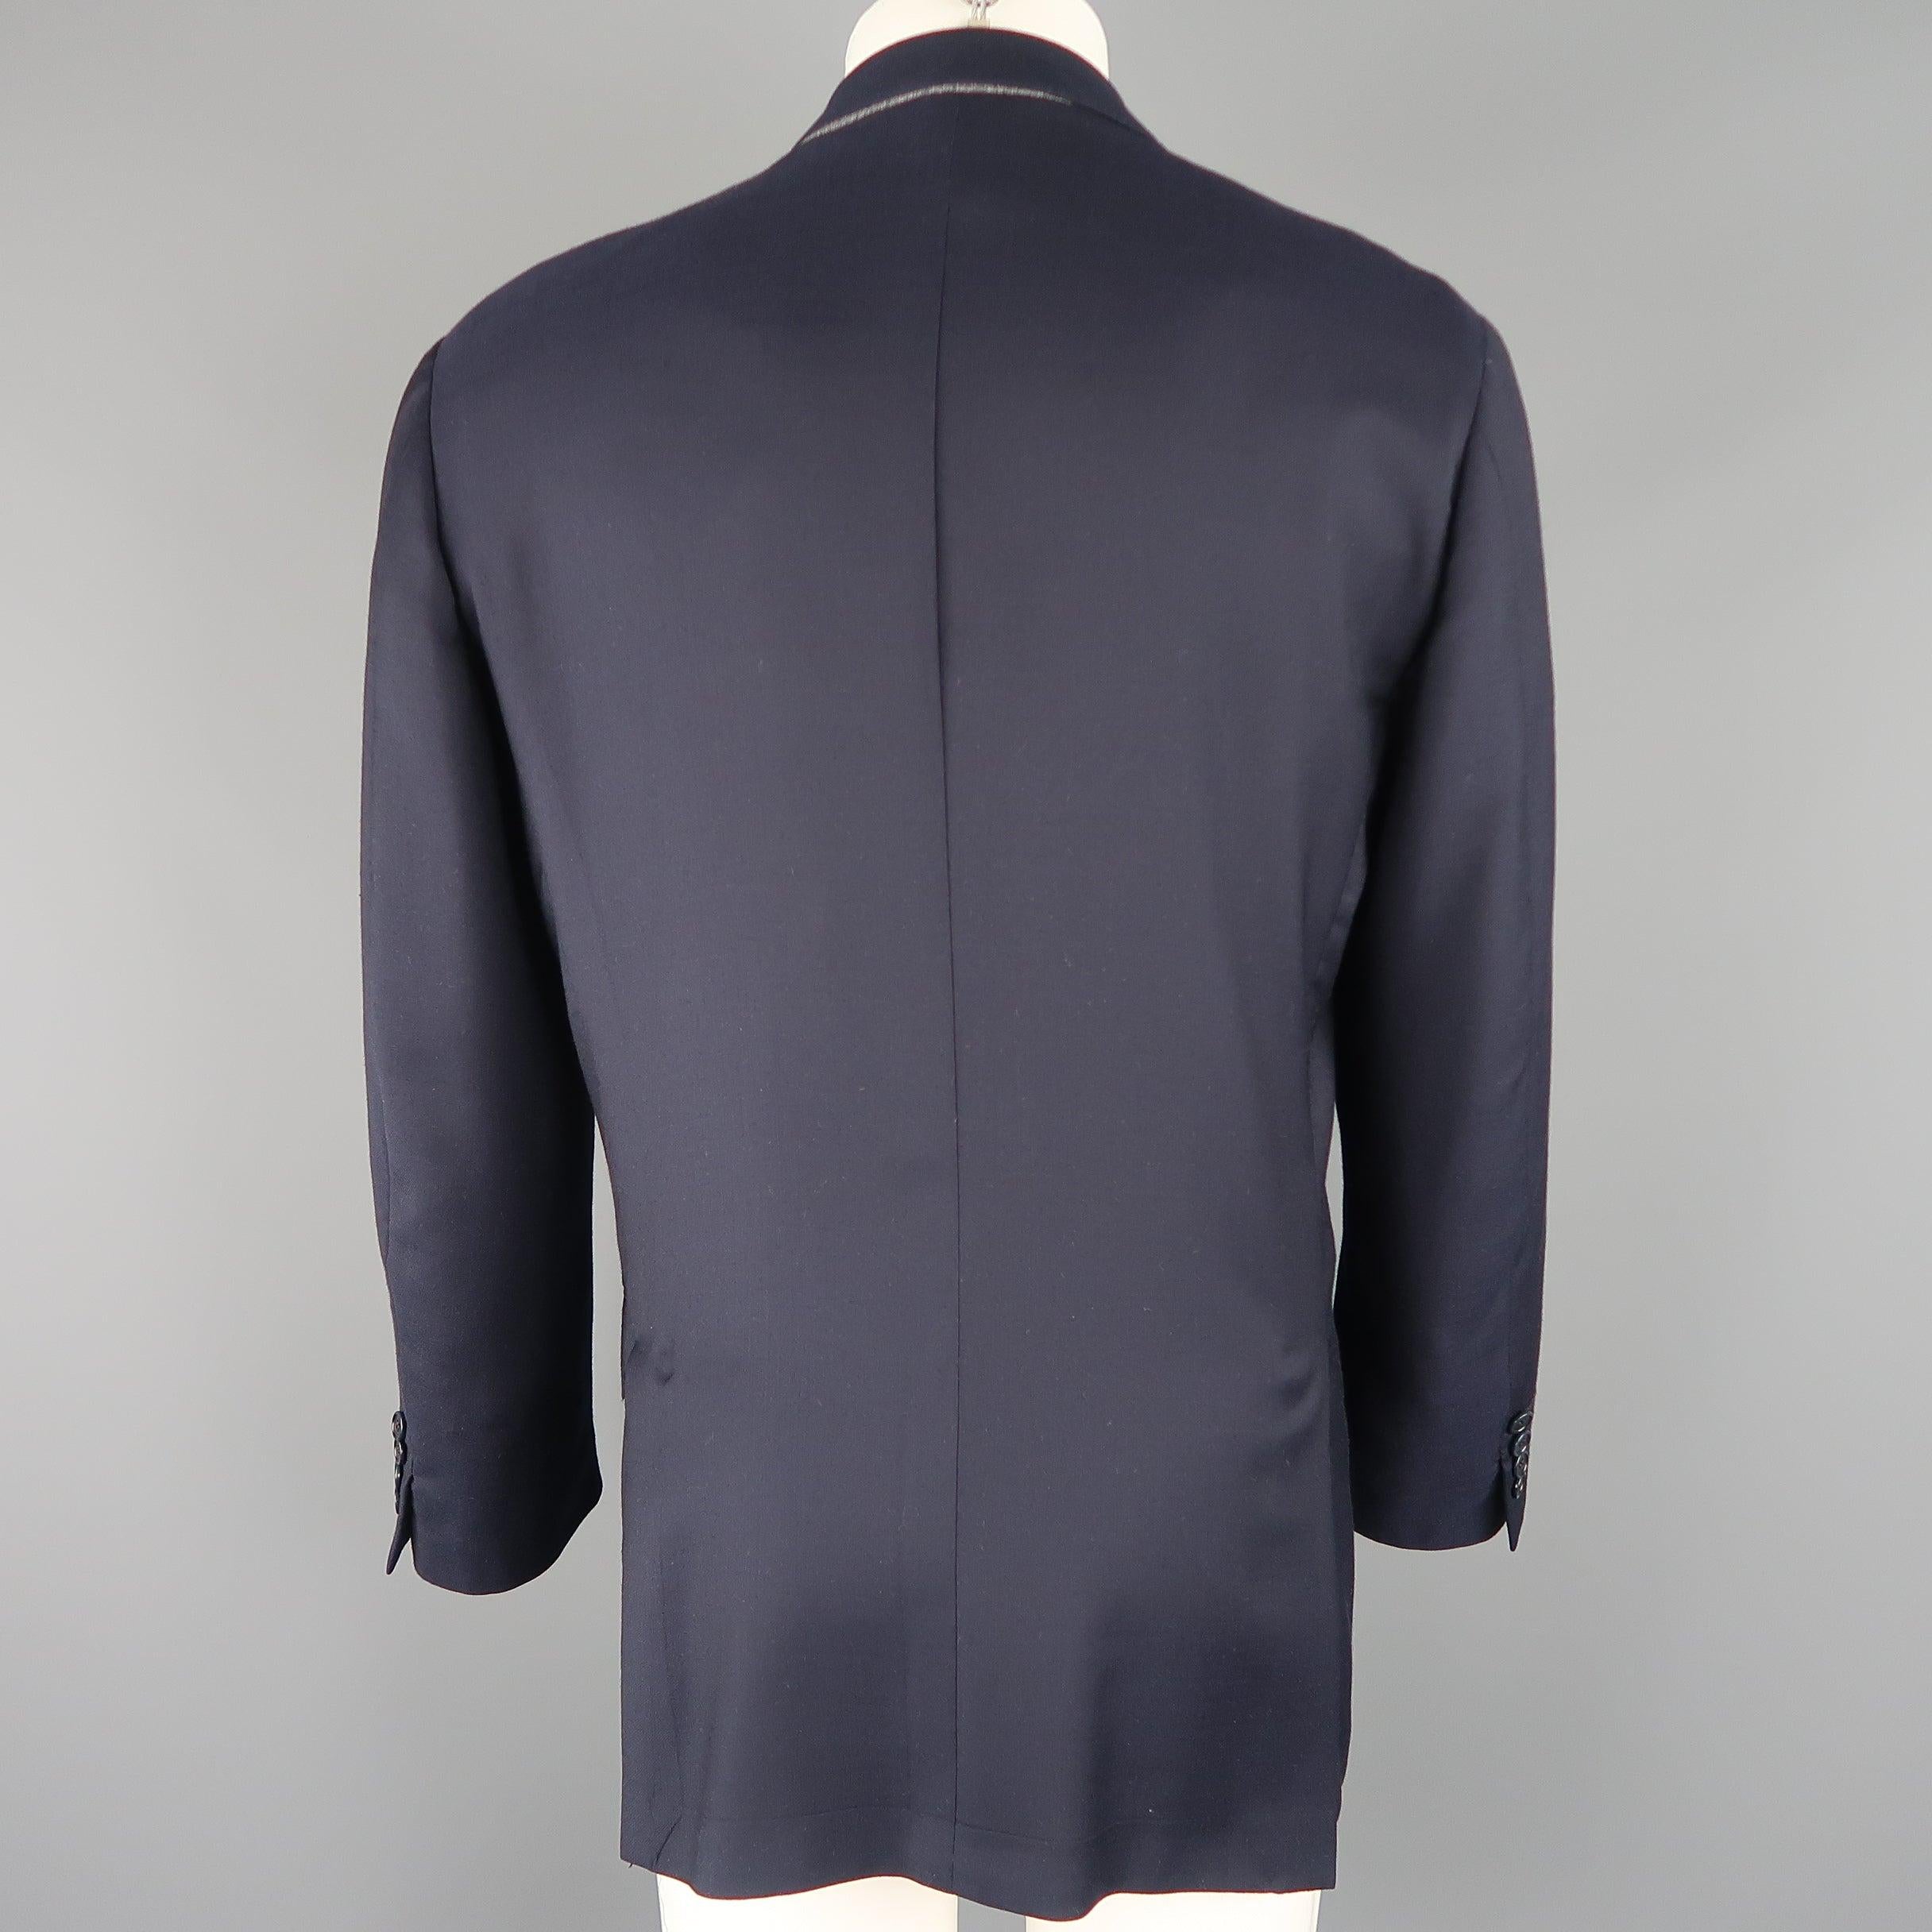 Men's ERMENEGILDO ZEGNA 44 Regular Navy Solid Wool Notch Lapel Sport Coat For Sale